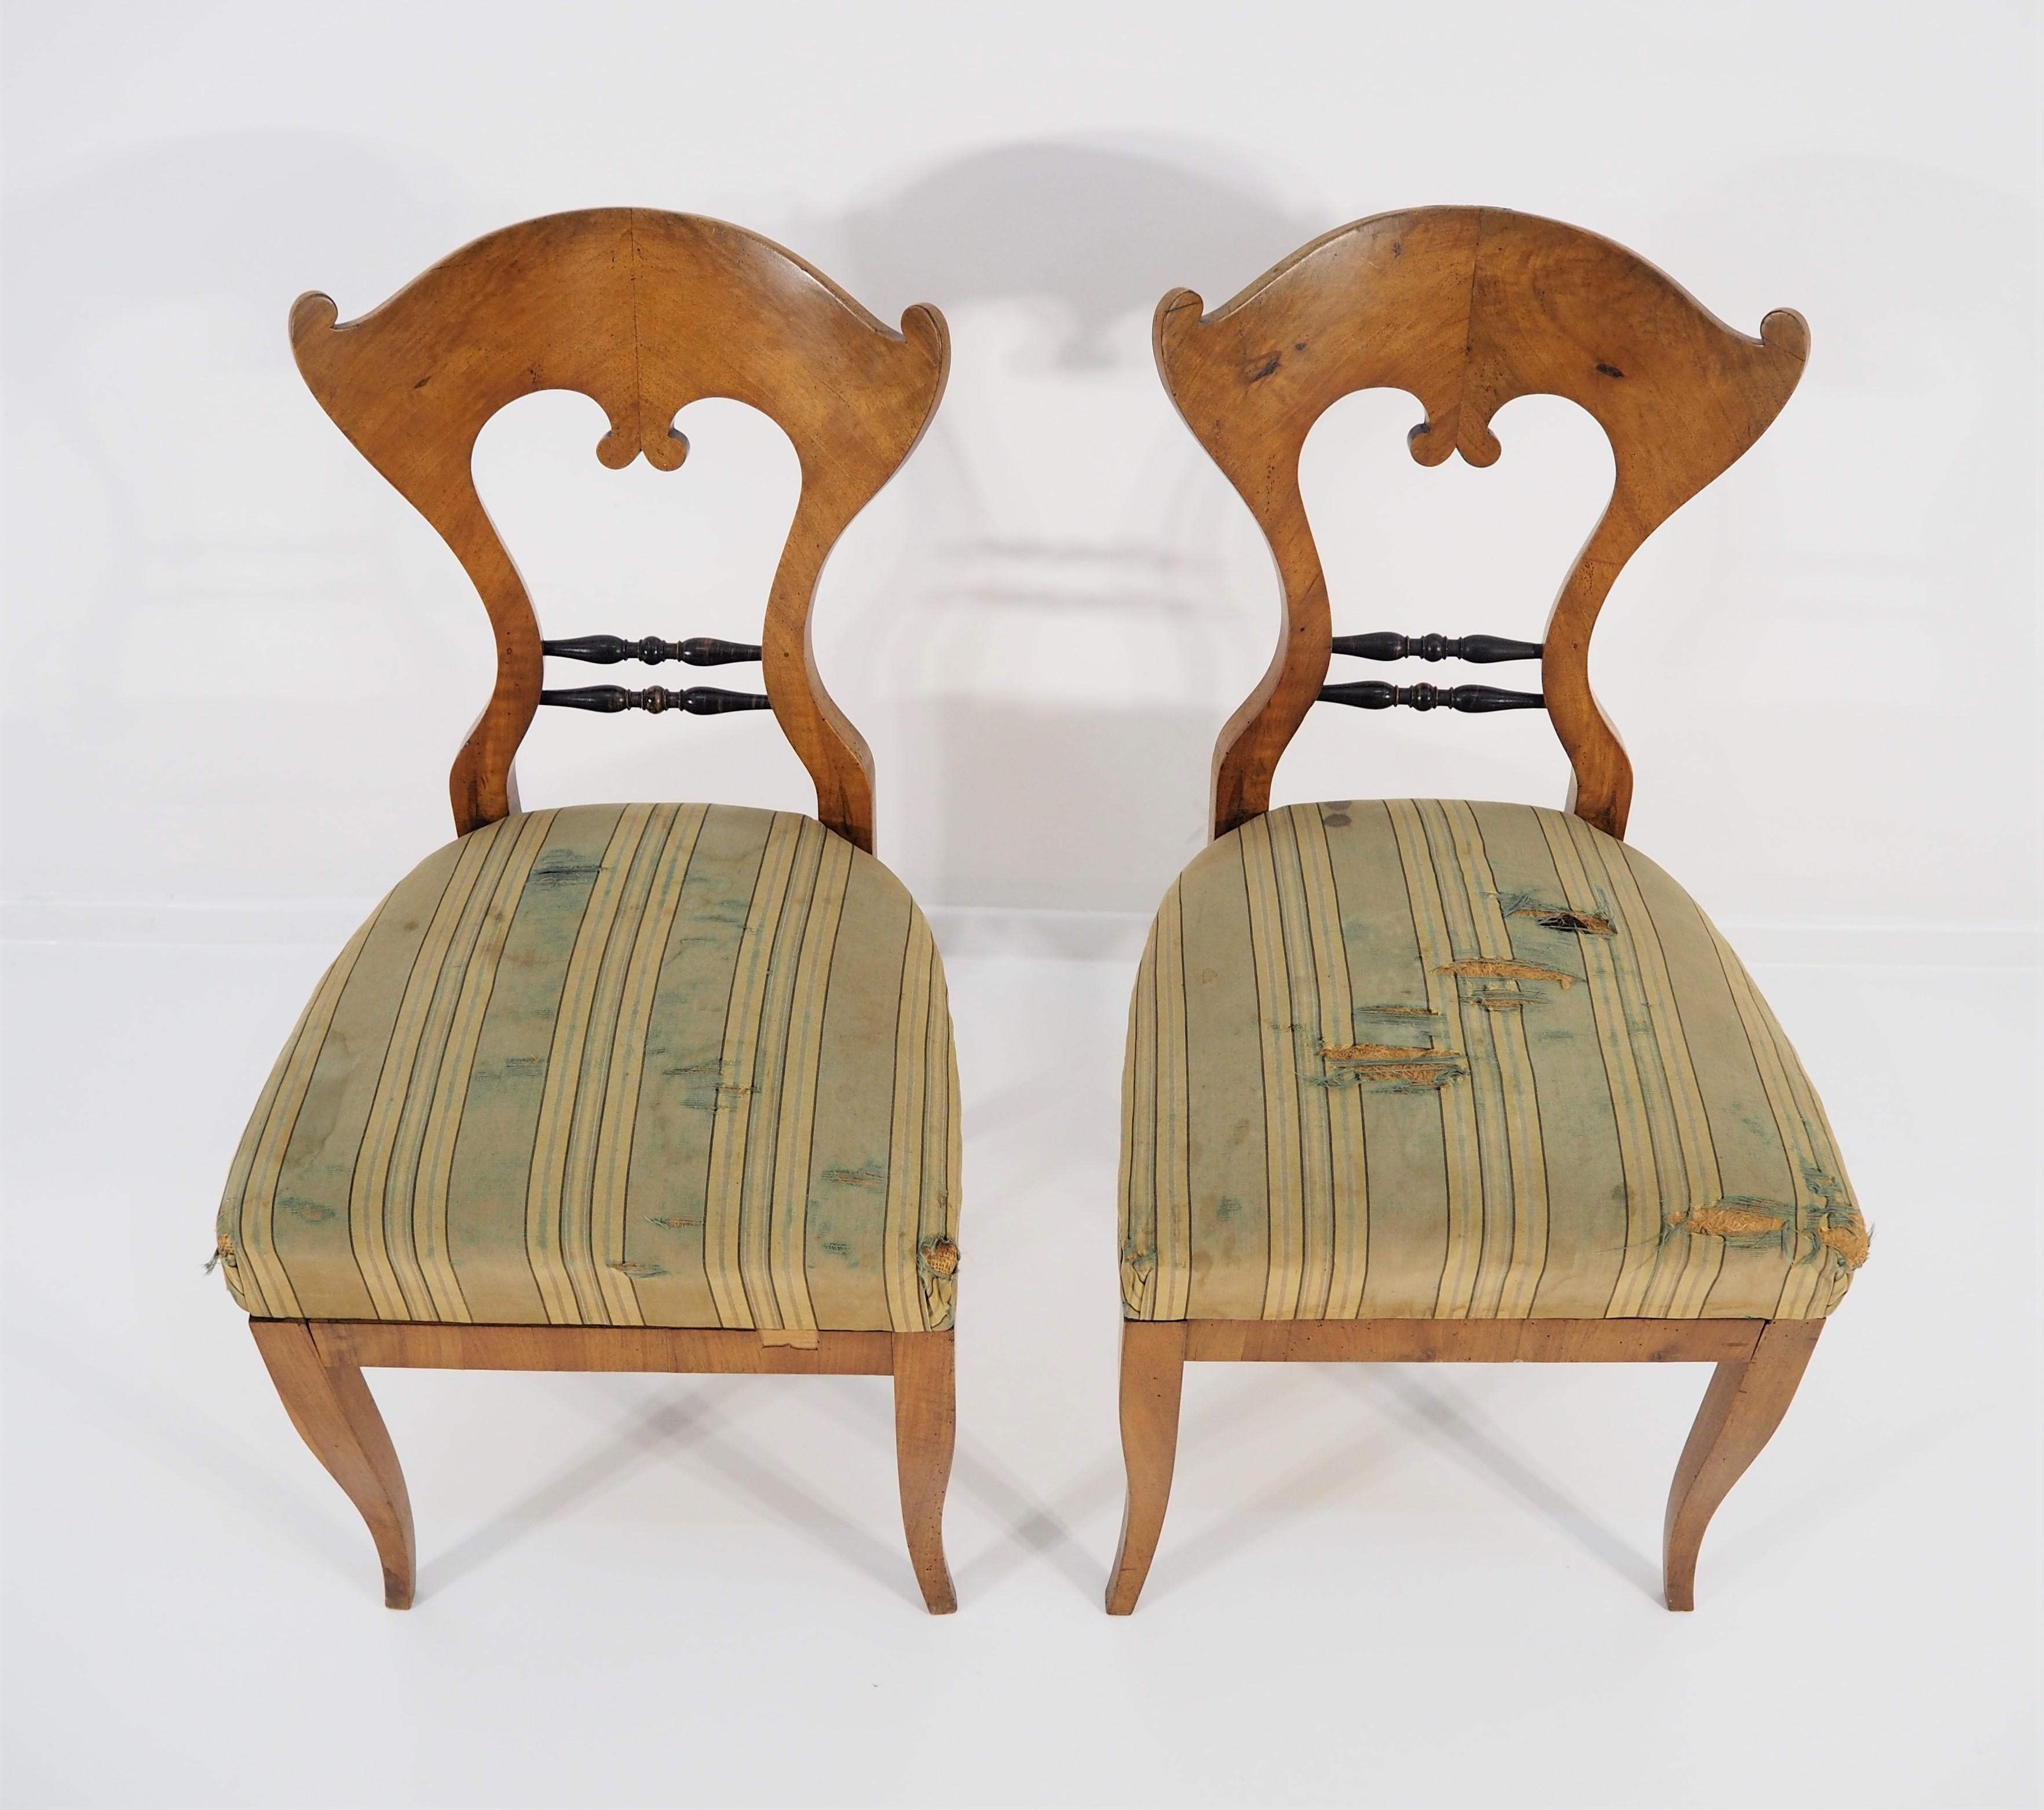 Antique Biedermeier dining chairs, set of 2. Original condition.